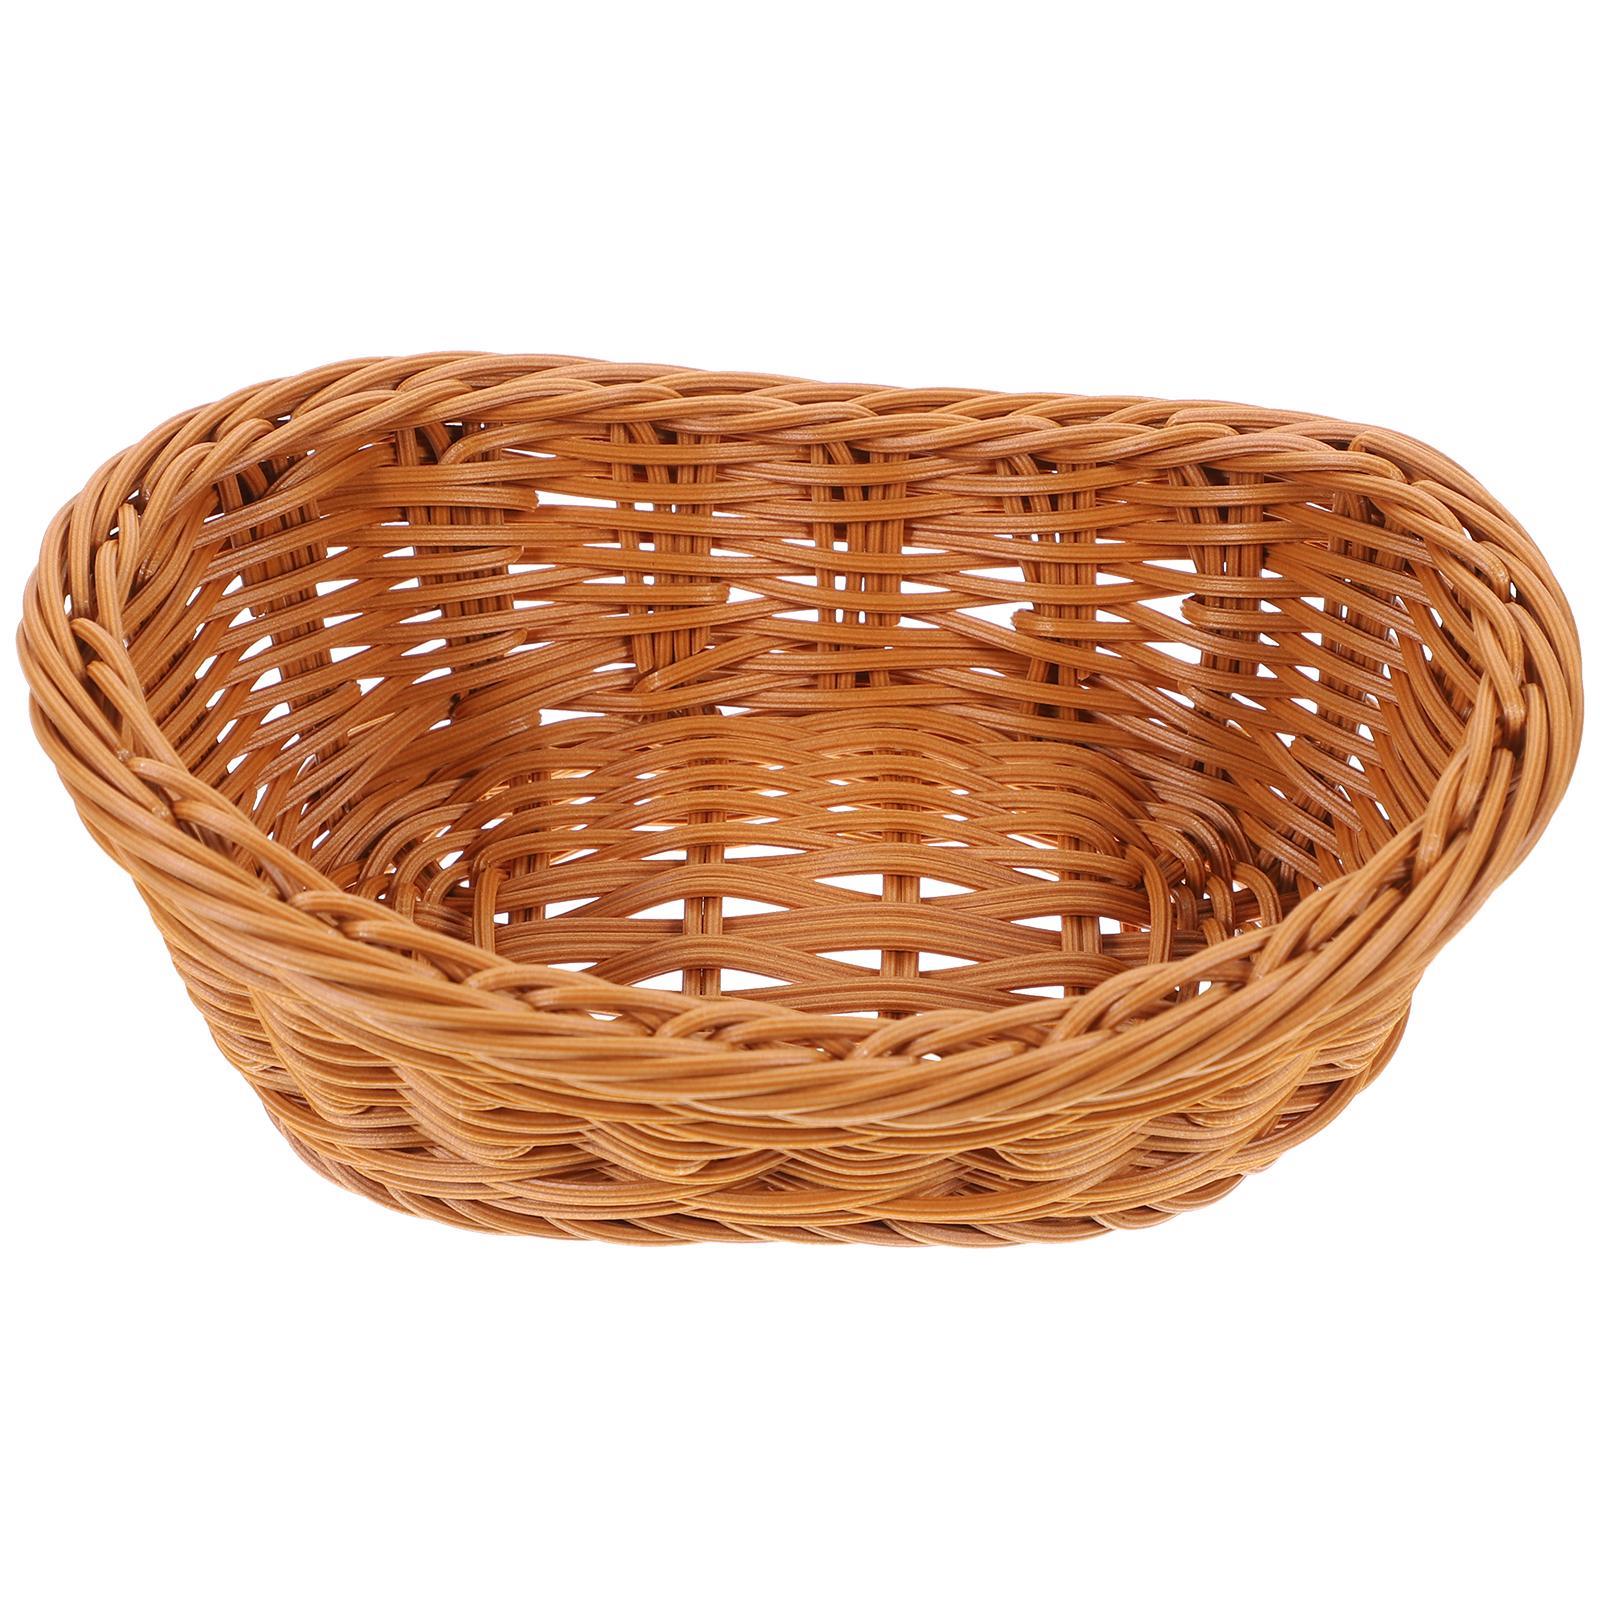 Bread Basket Garlic Fruits Baskets For Serving Home Goods Househole Items